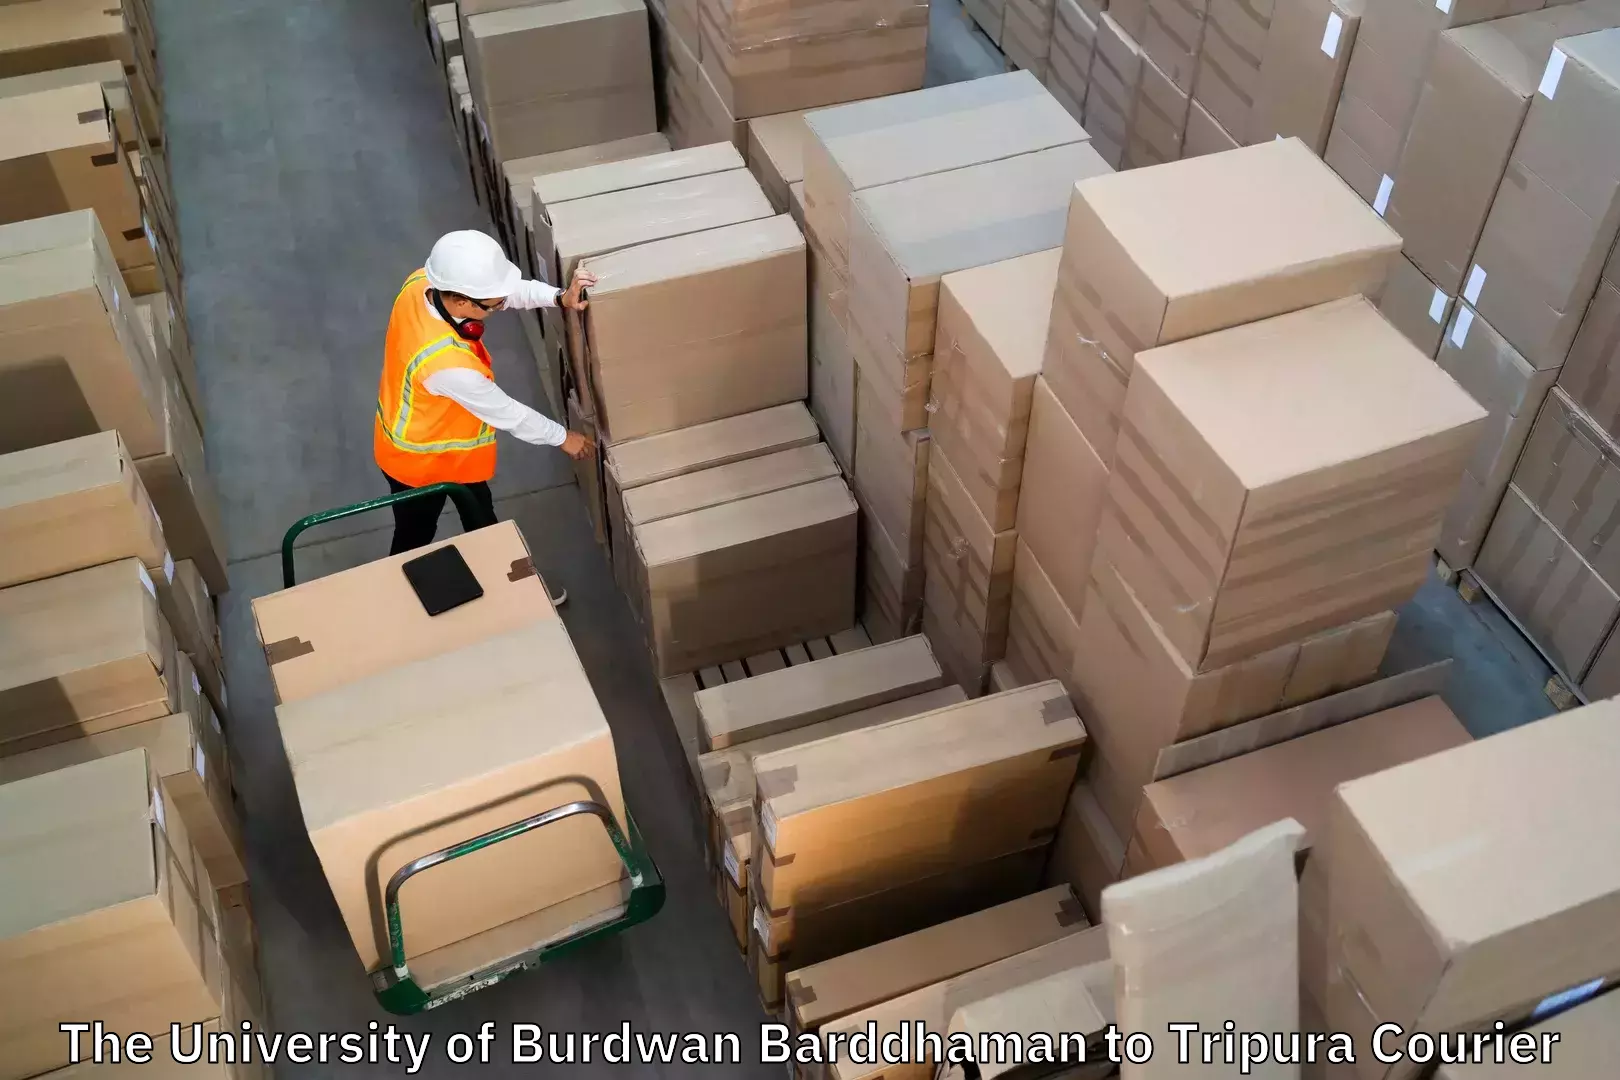 Baggage relocation service The University of Burdwan Barddhaman to North Tripura